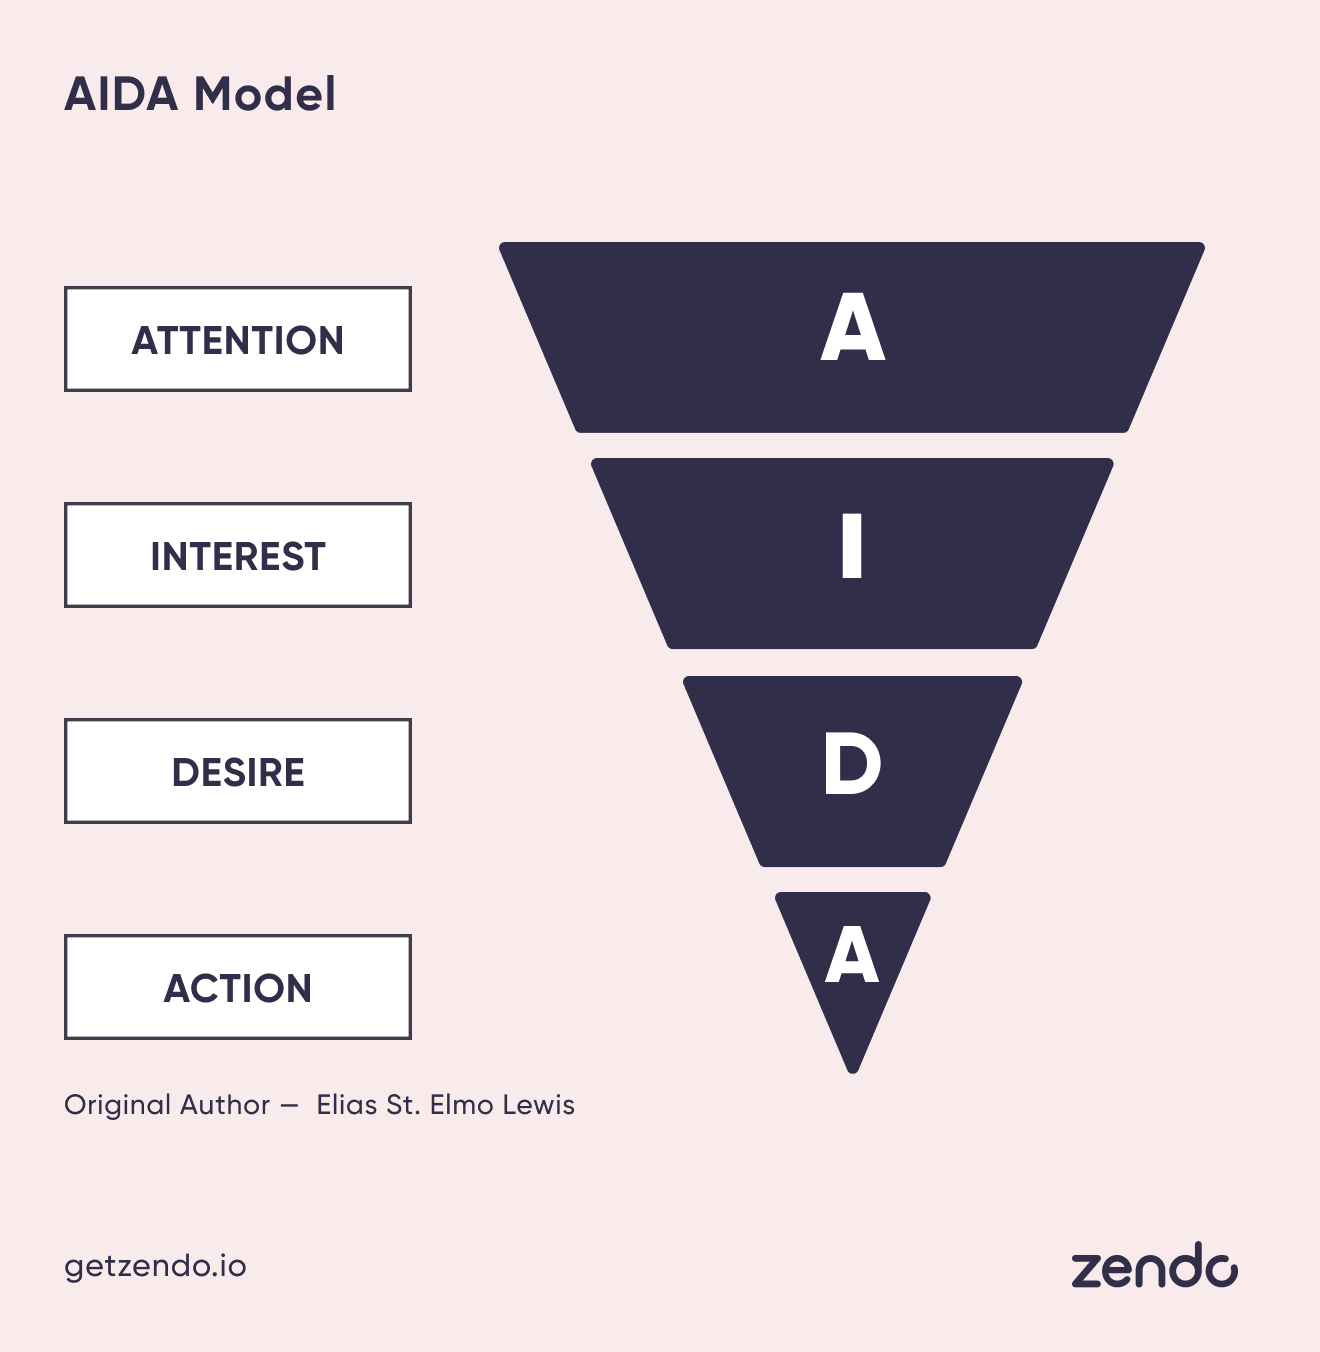 The AIDA model: Attention, Interest, Desire, Action. Original author: Elias St. Elmo Lewis.